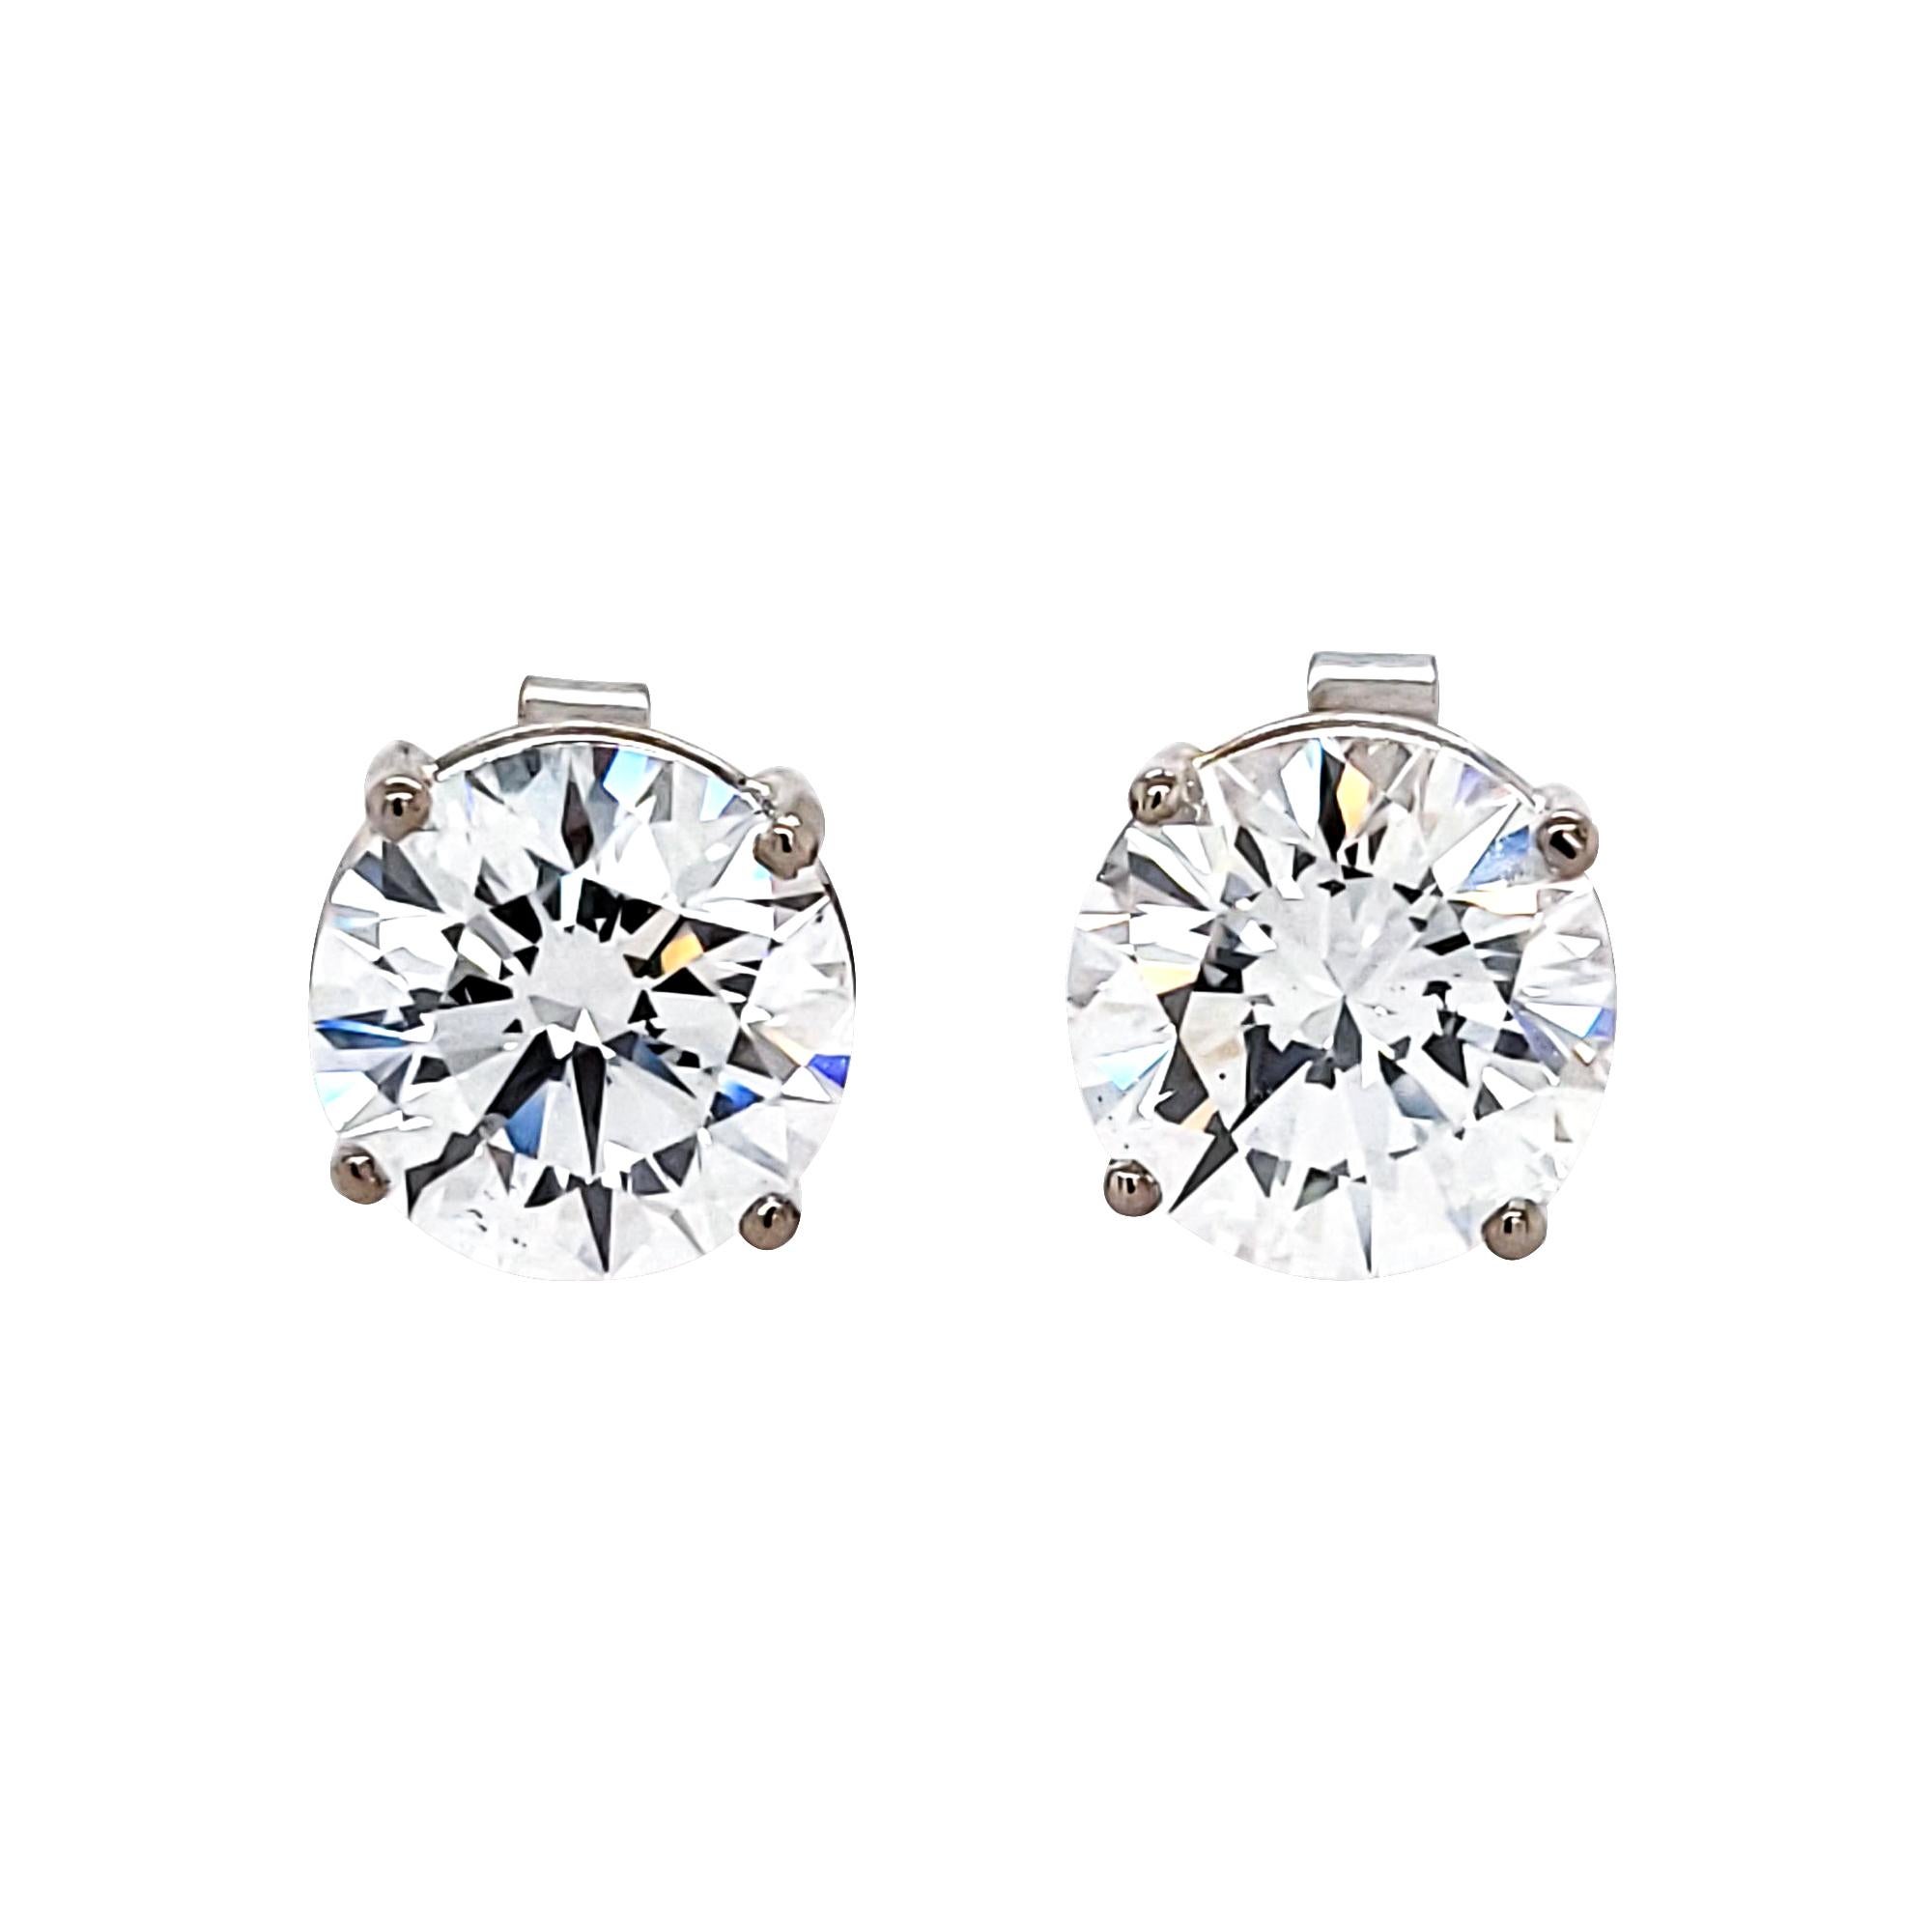 Spectra Fine Jewelry, GIA Certified 2.09 & 2.16 Carat Round Diamond Earrings